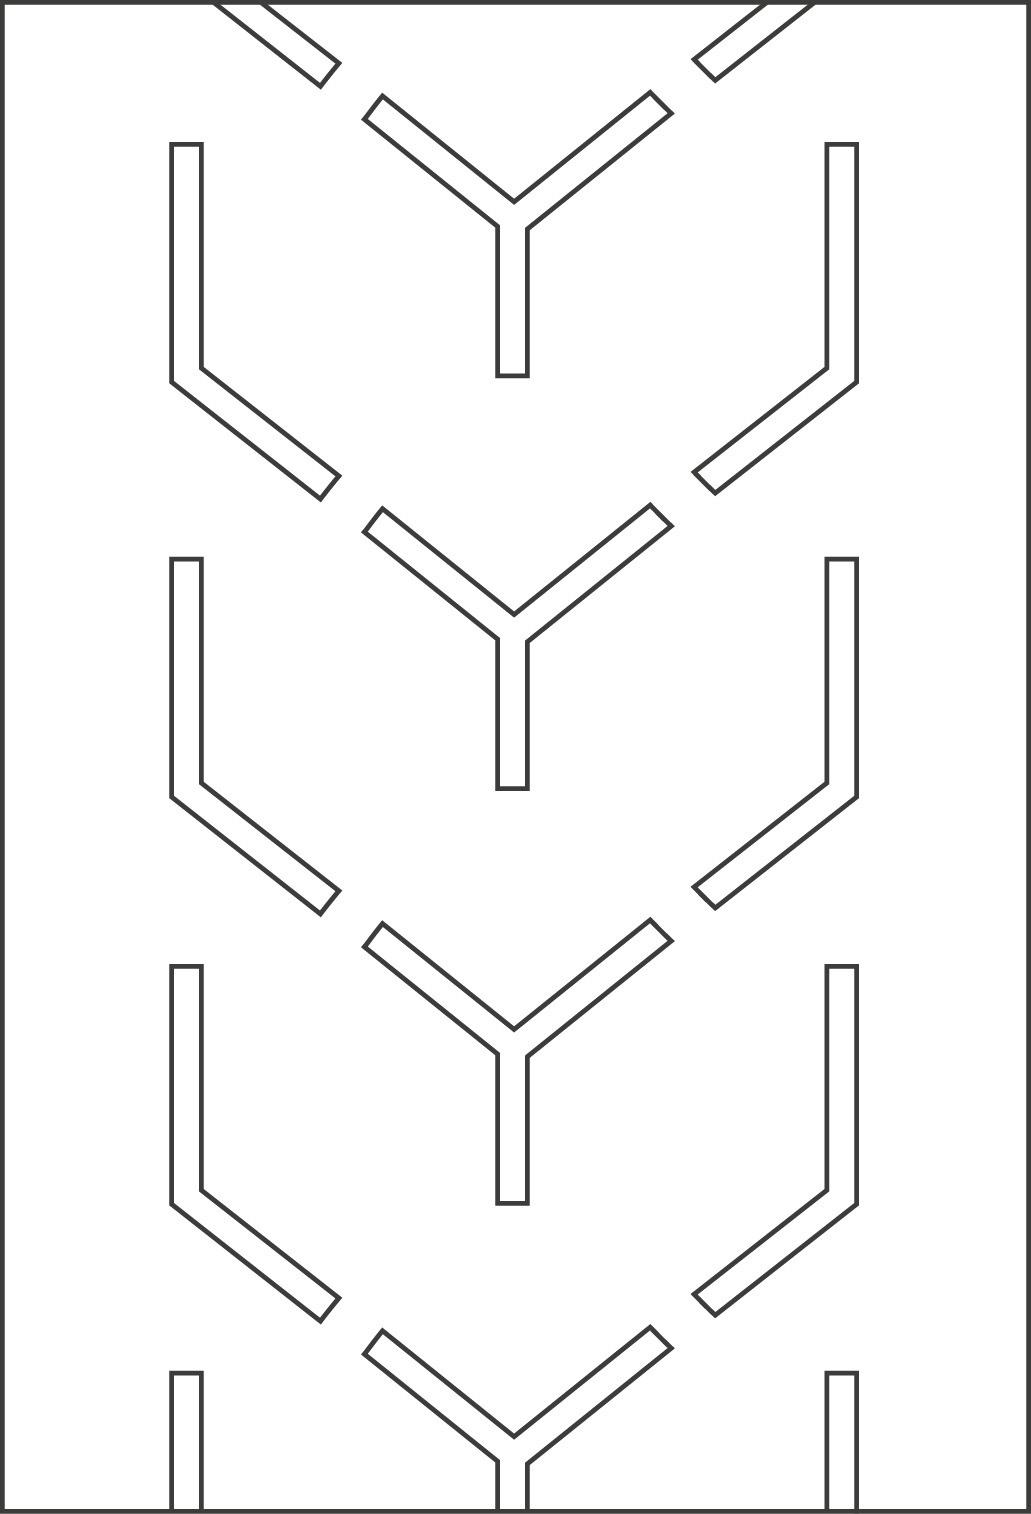 Cleated V Type Ep Rubber Chevron Belt Patterned Conveyor Belting